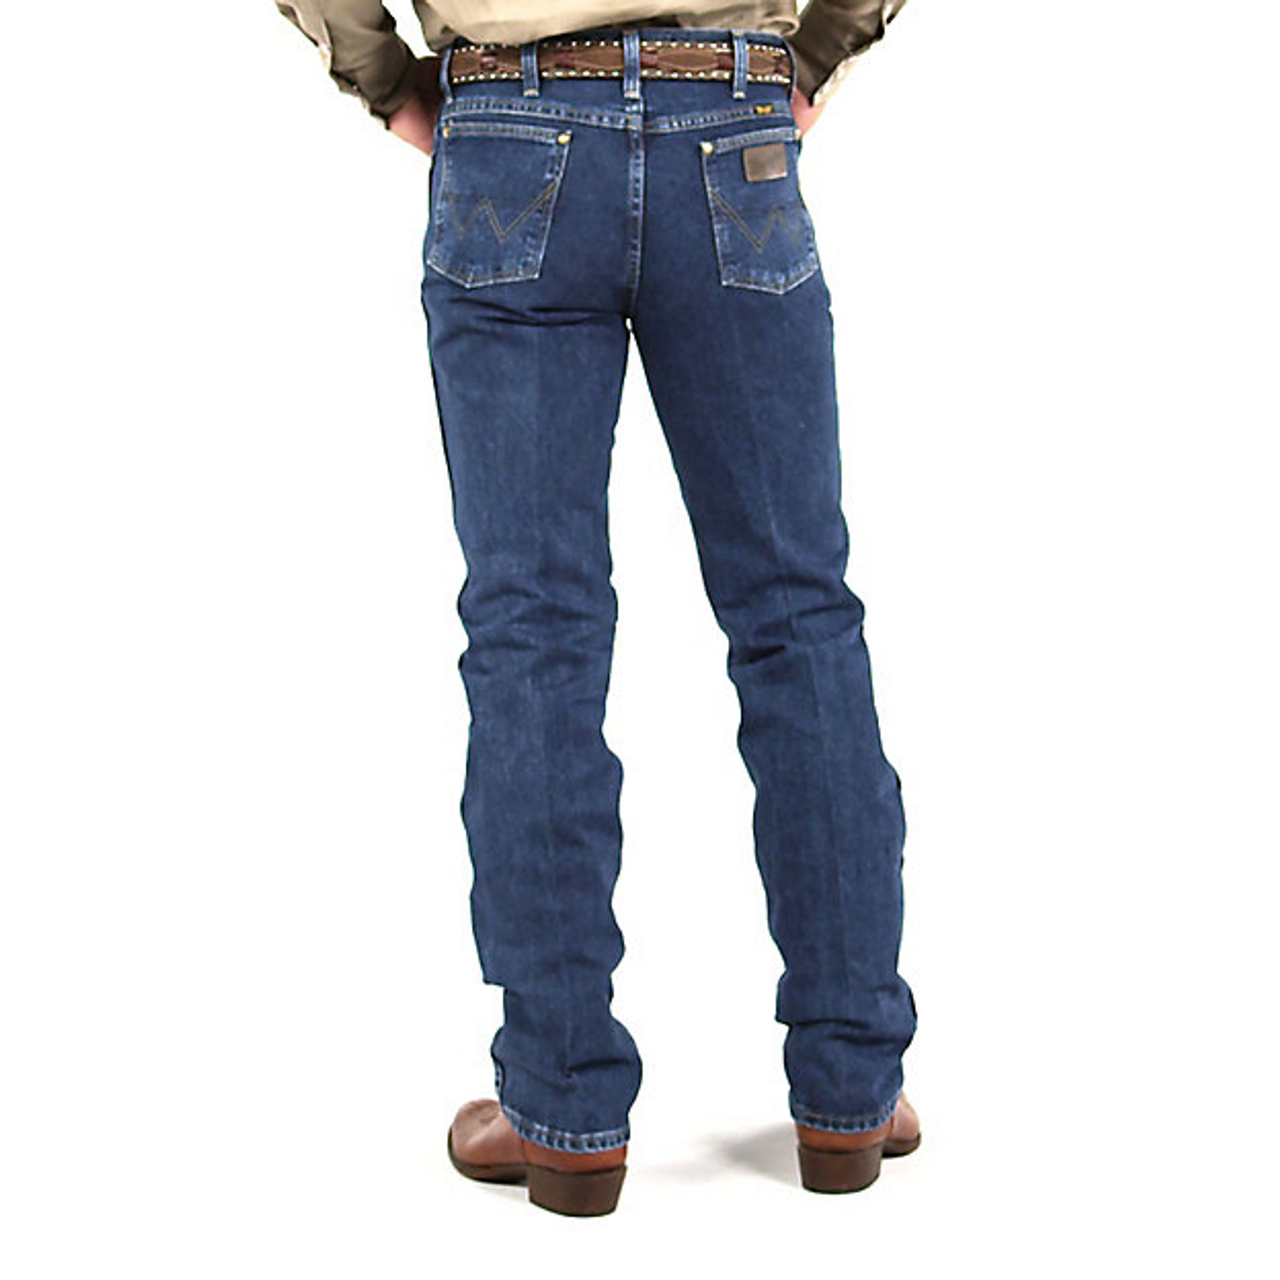 Wrangler Men's Jeans - George Strait Slim Fit Cowboy Cut - Heavyweight ...